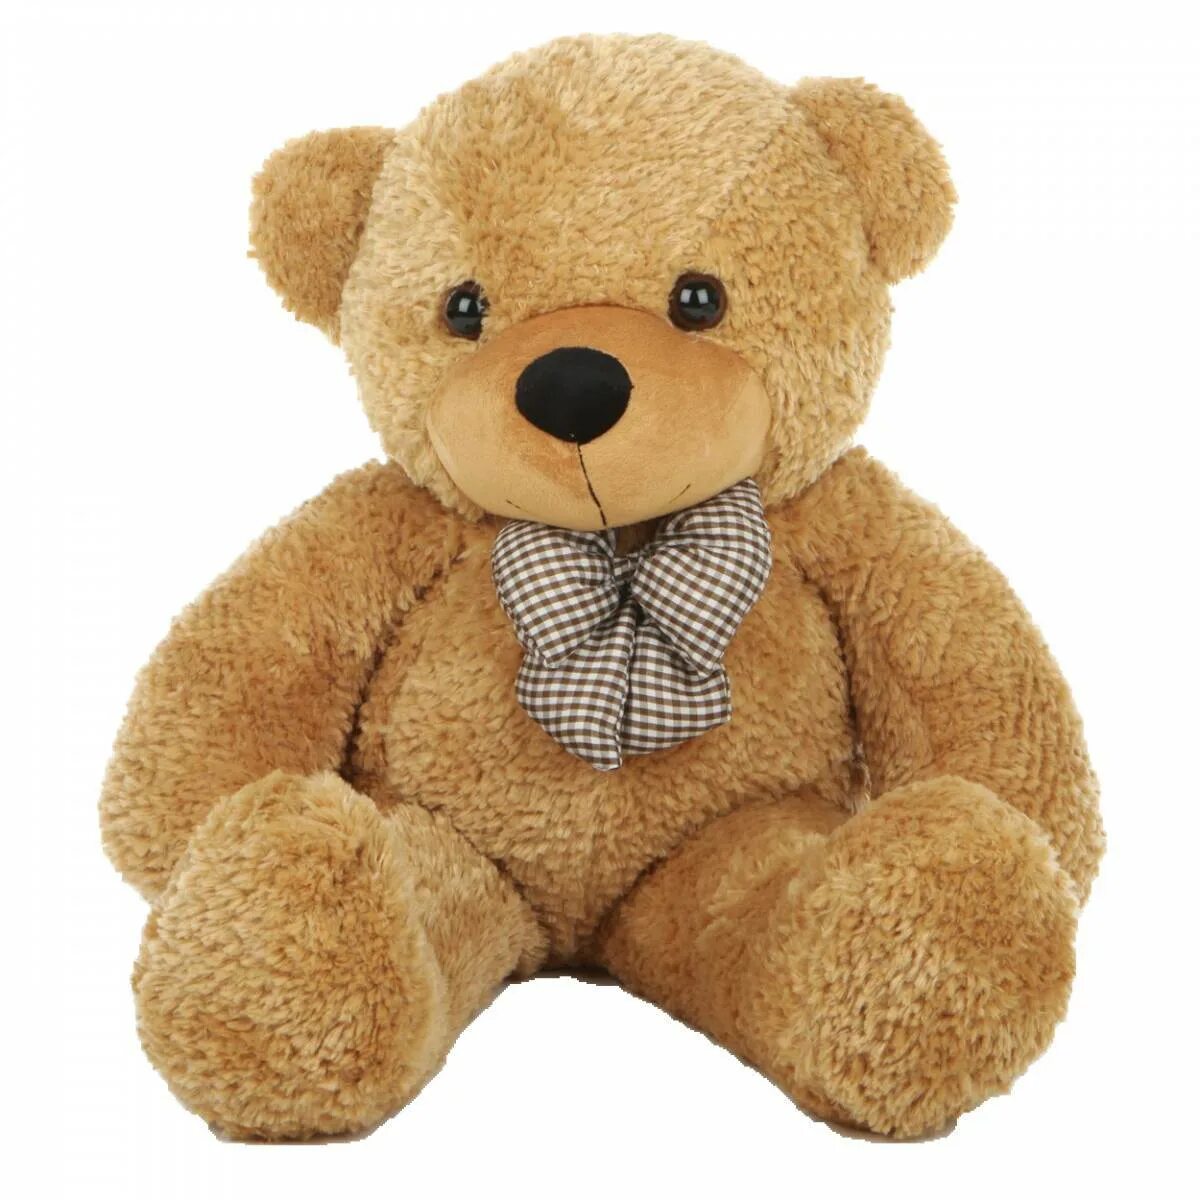 Toy картинка. Тедди Беар. Тедди Беар игрушка. Плюшевый медведь Teddy Bear. Мишка Teddy Беар.